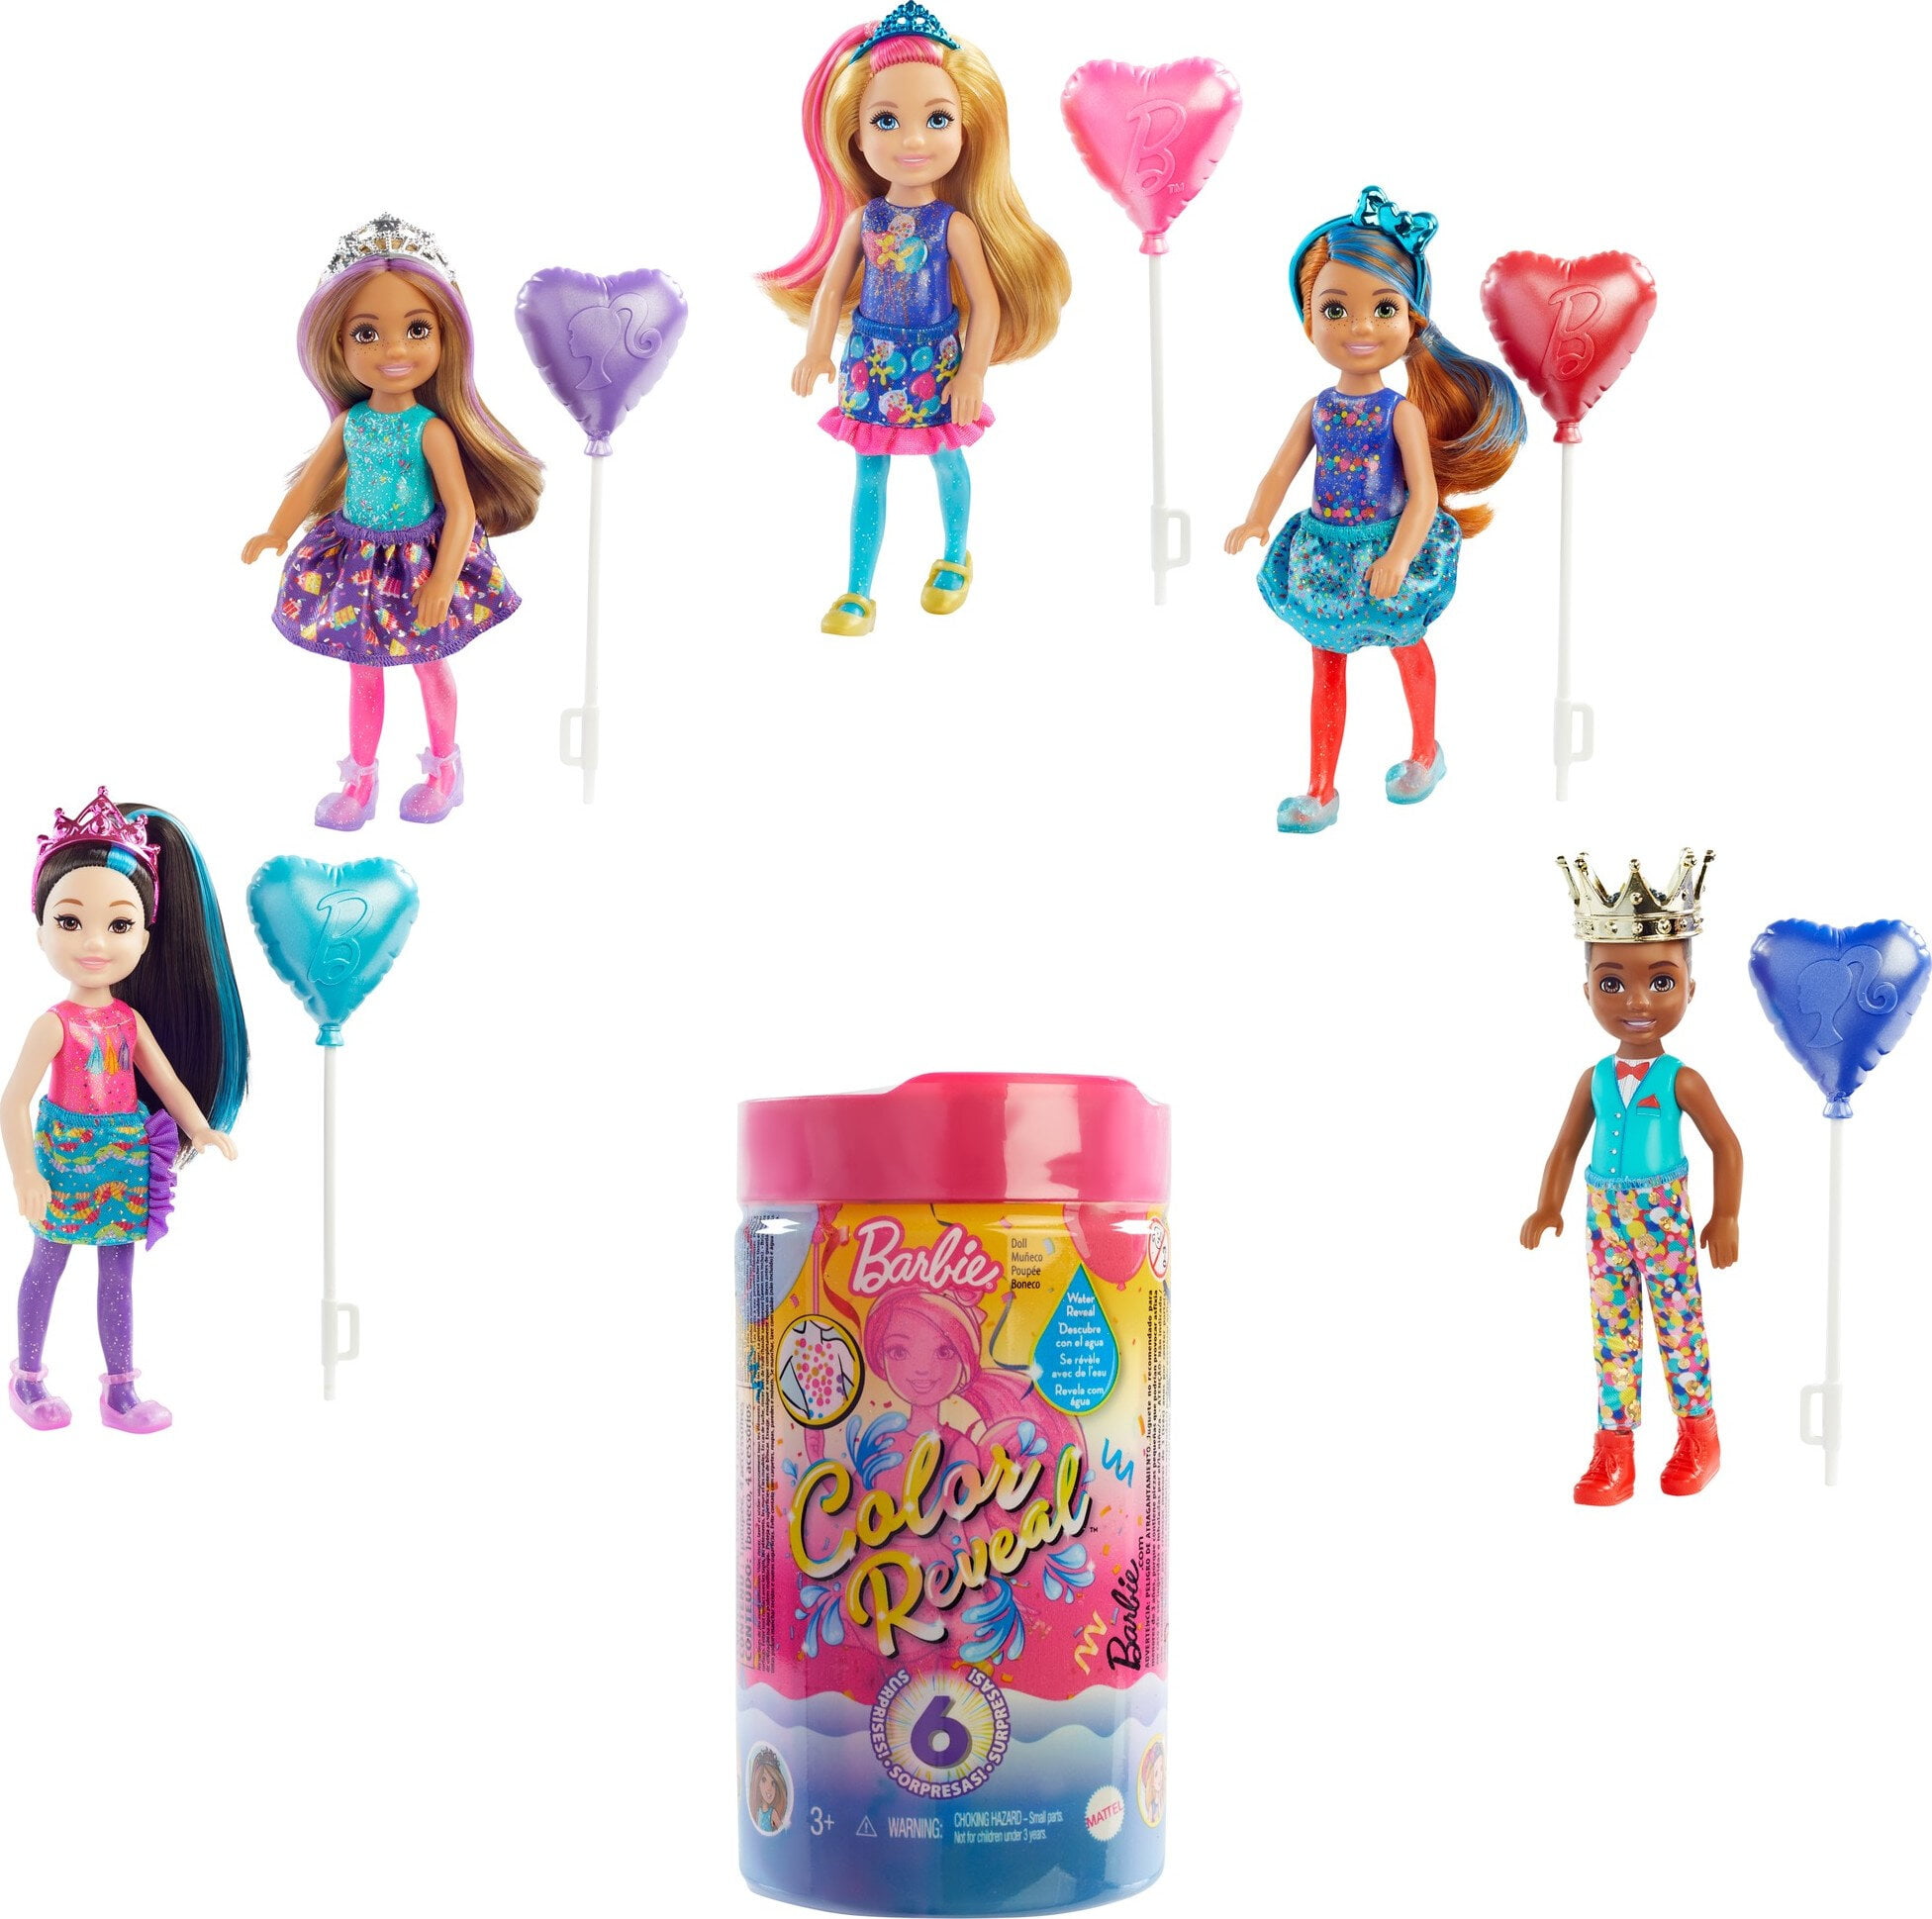 Barbie Chelsea Color Reveal Doll with Confetti Print & 6 Surprises